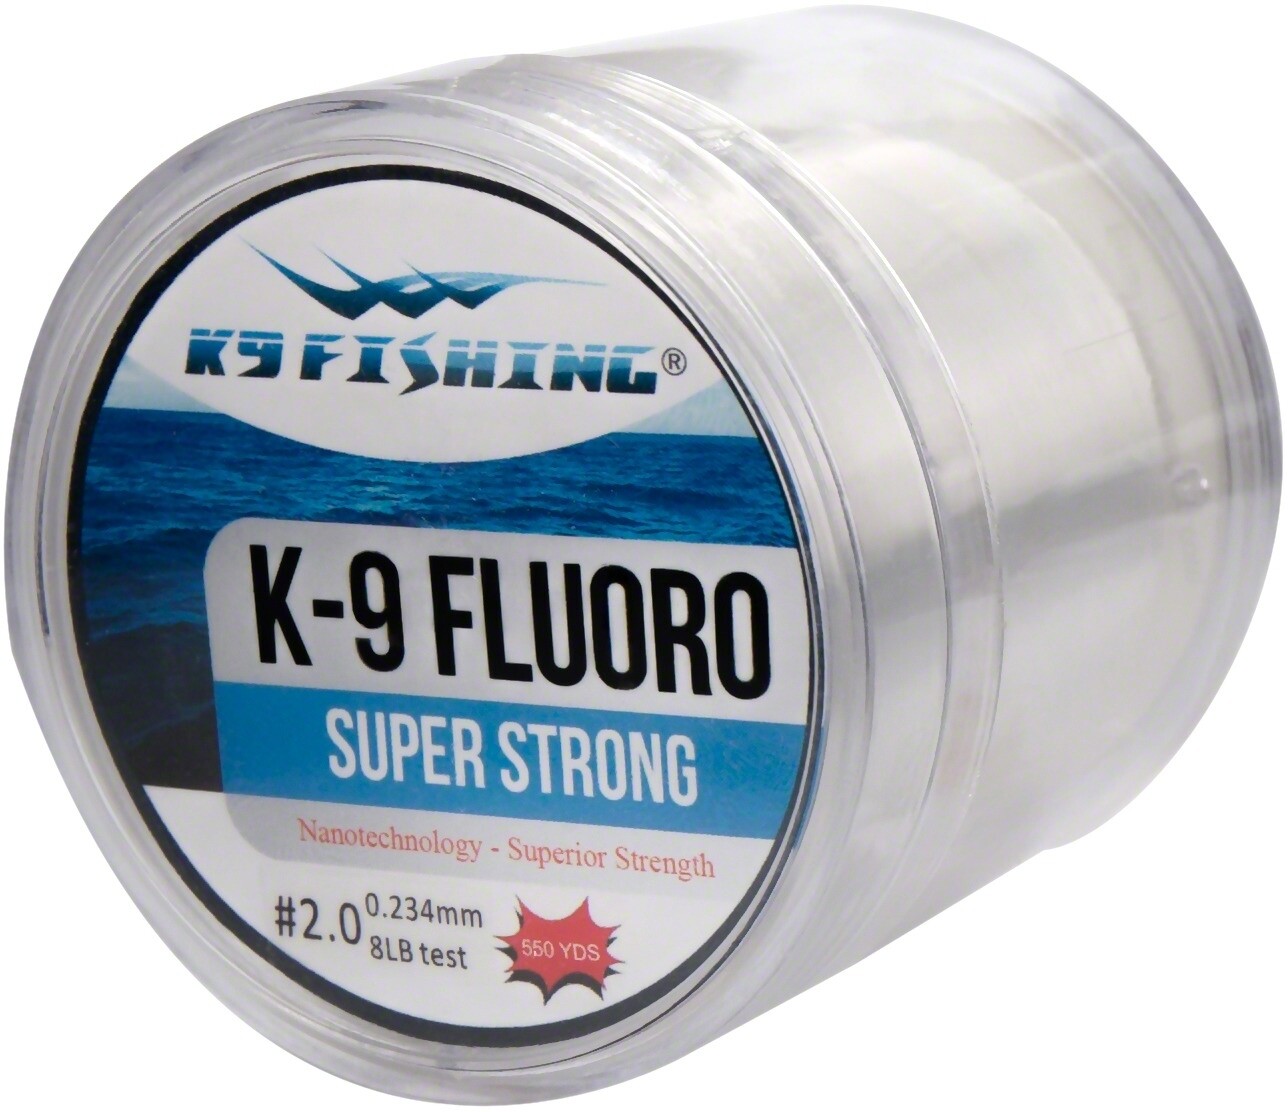 K9 550-8lb-CL Clear Fluoro Line 550 yard spool 8lb test